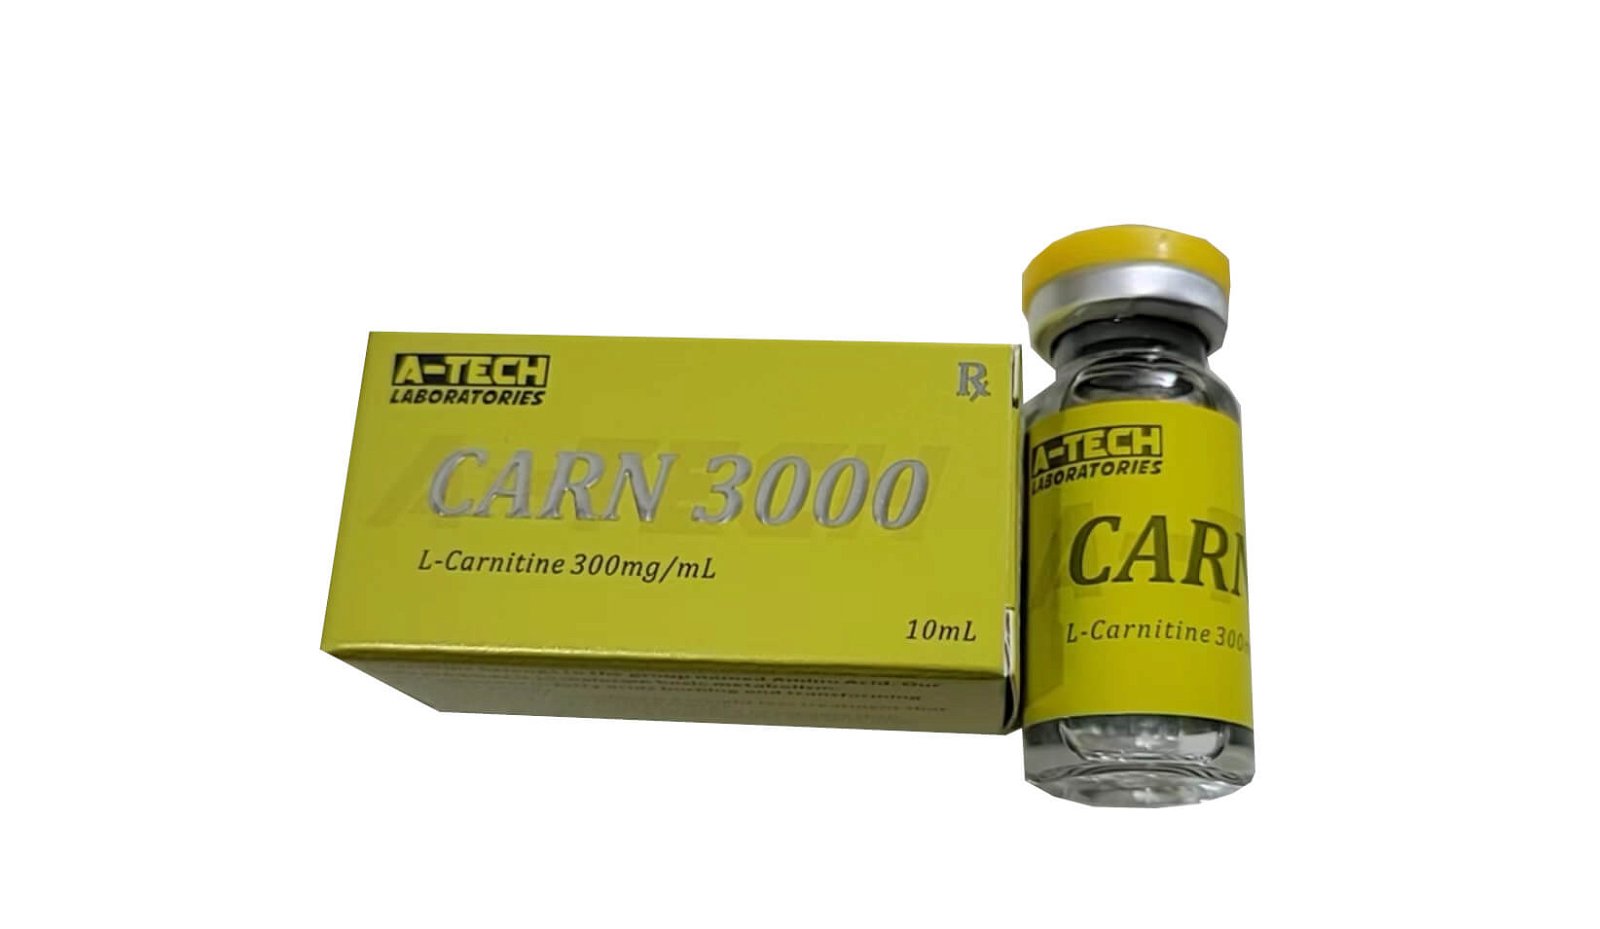 L-carnitin 300mg A-tech laboratorier